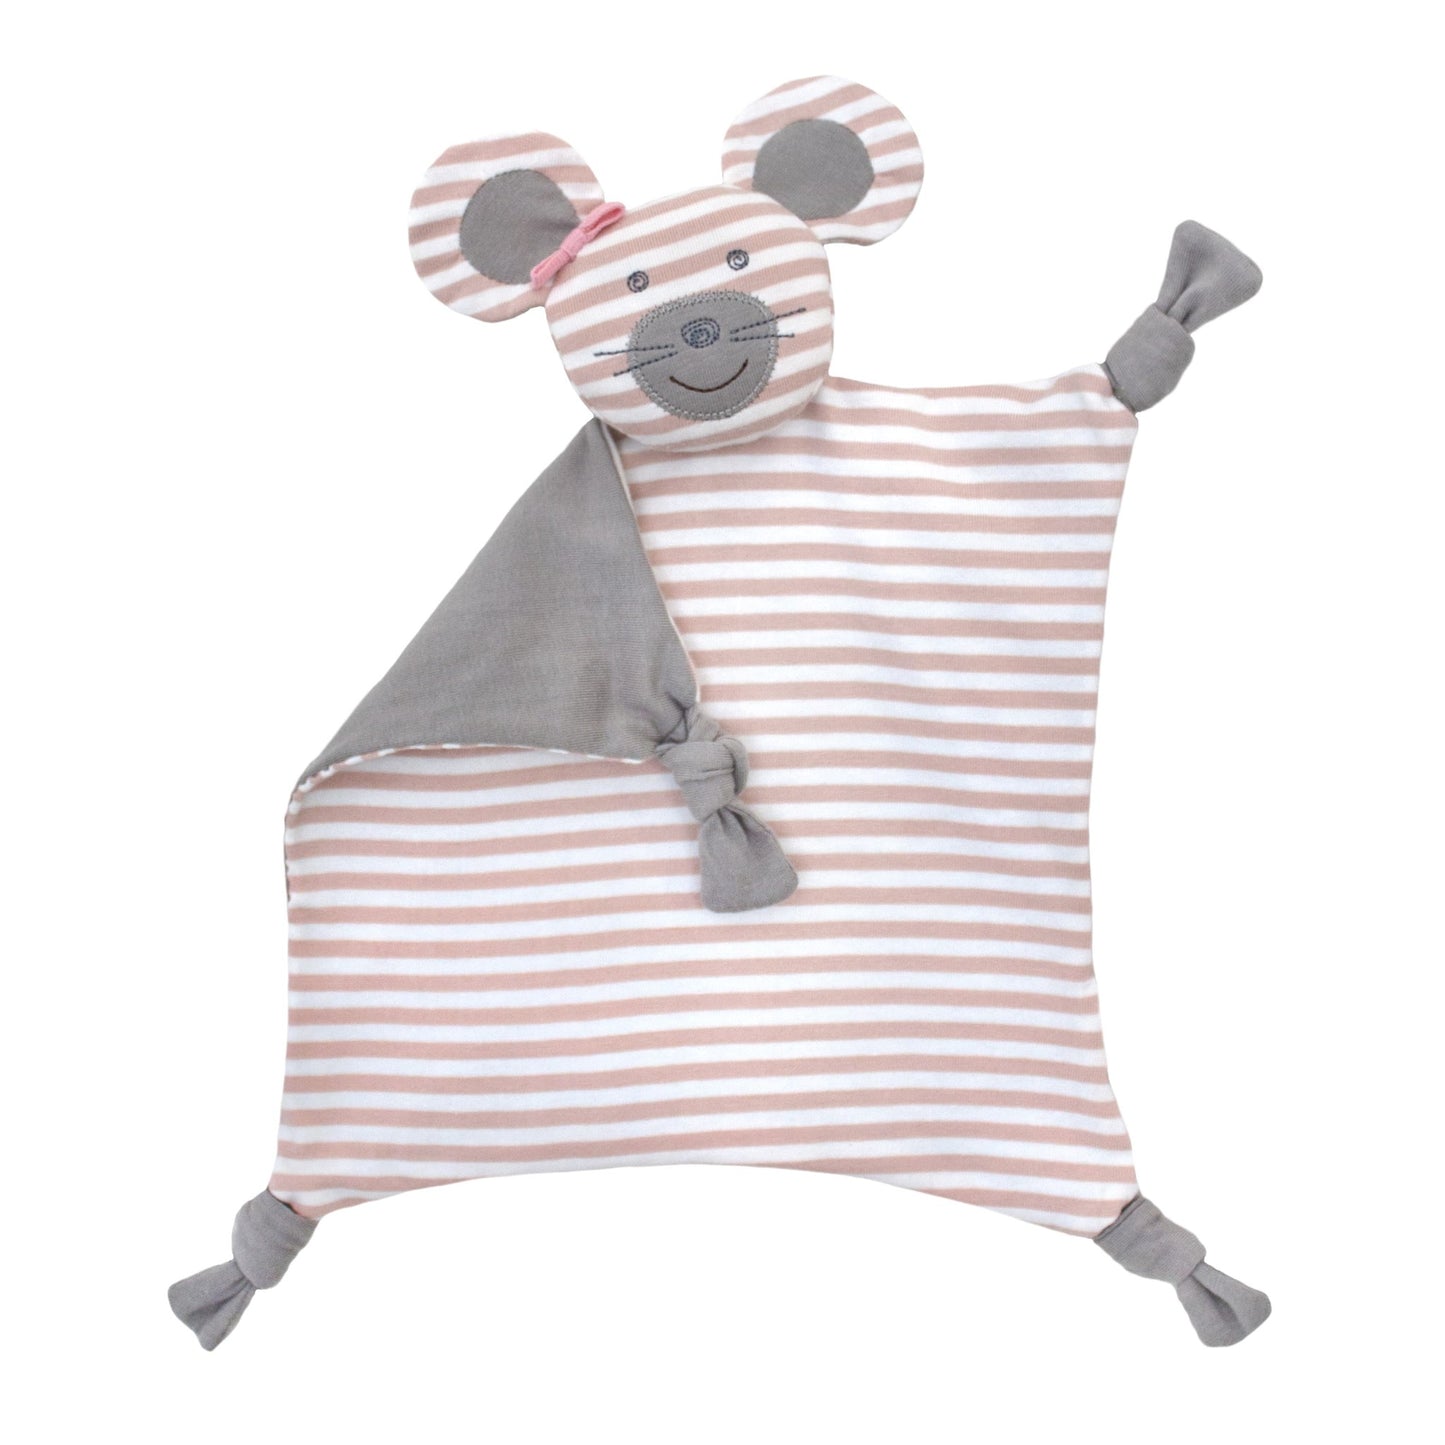 Organic Farm Buddies Ballerina Mouse cuddly blanket